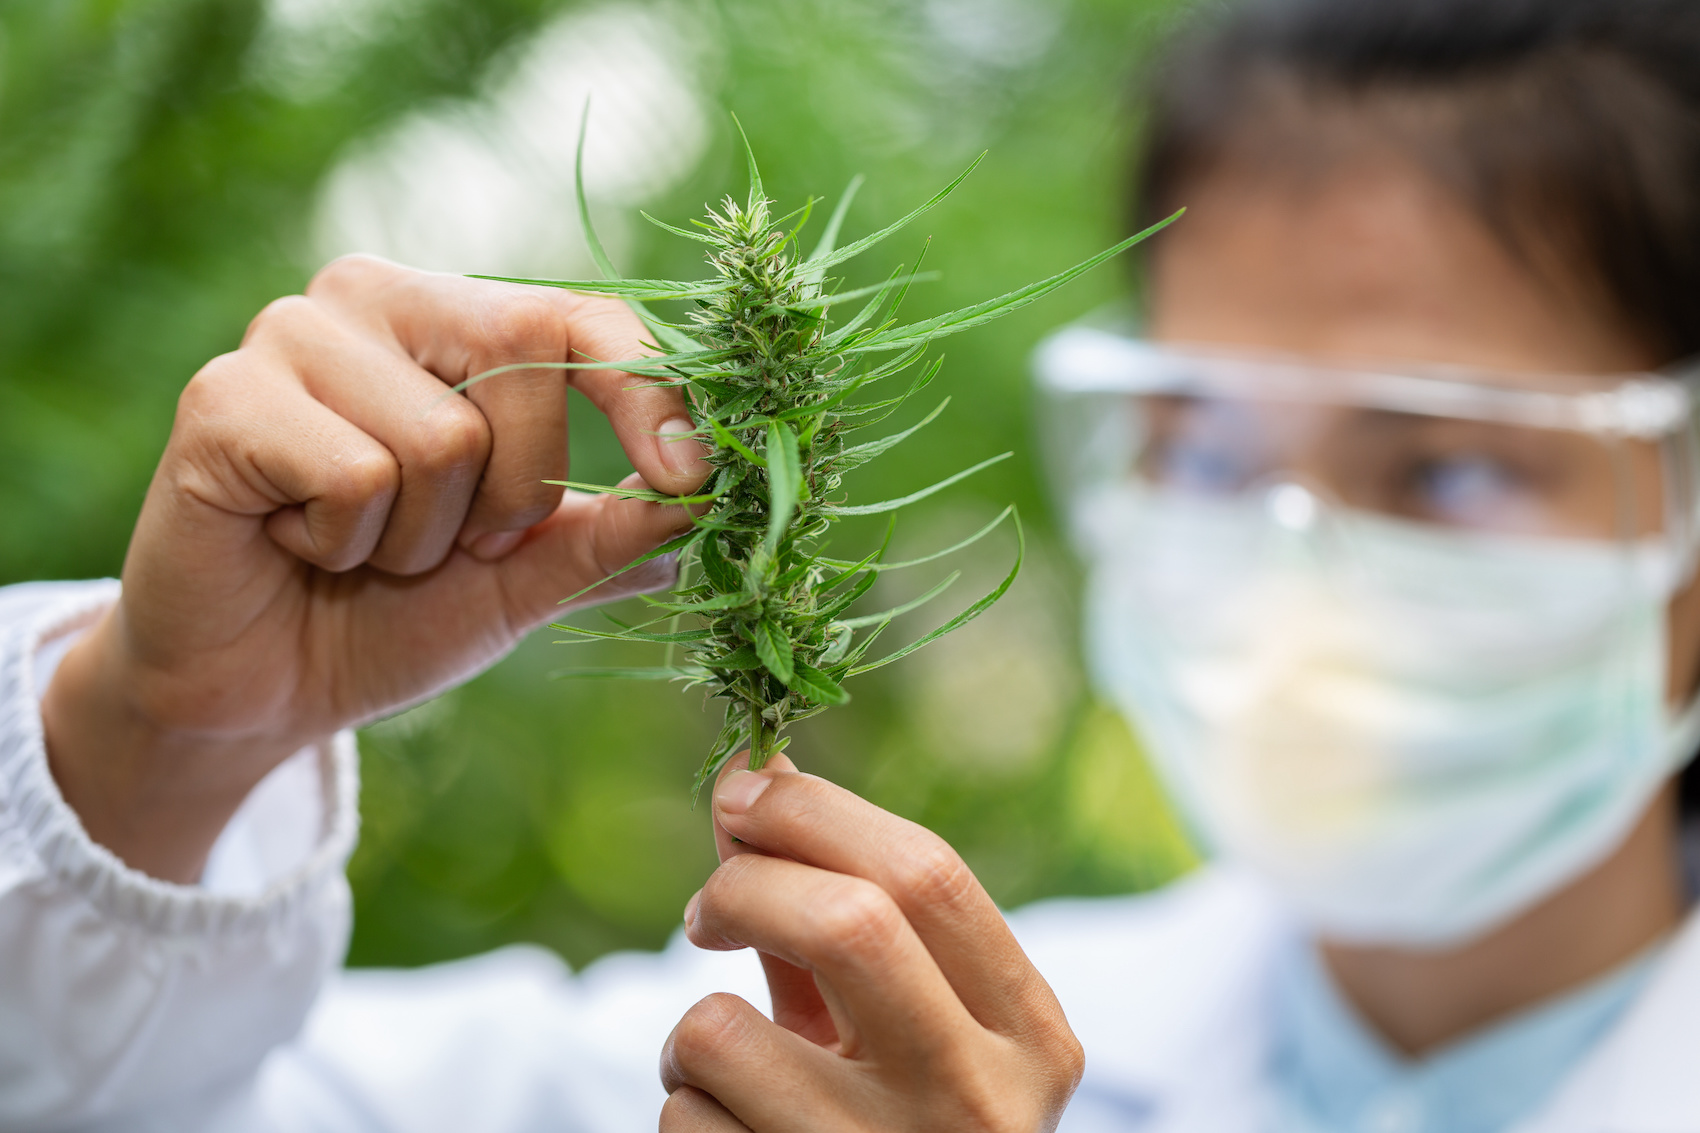 Researchers analyzing cannabis plant